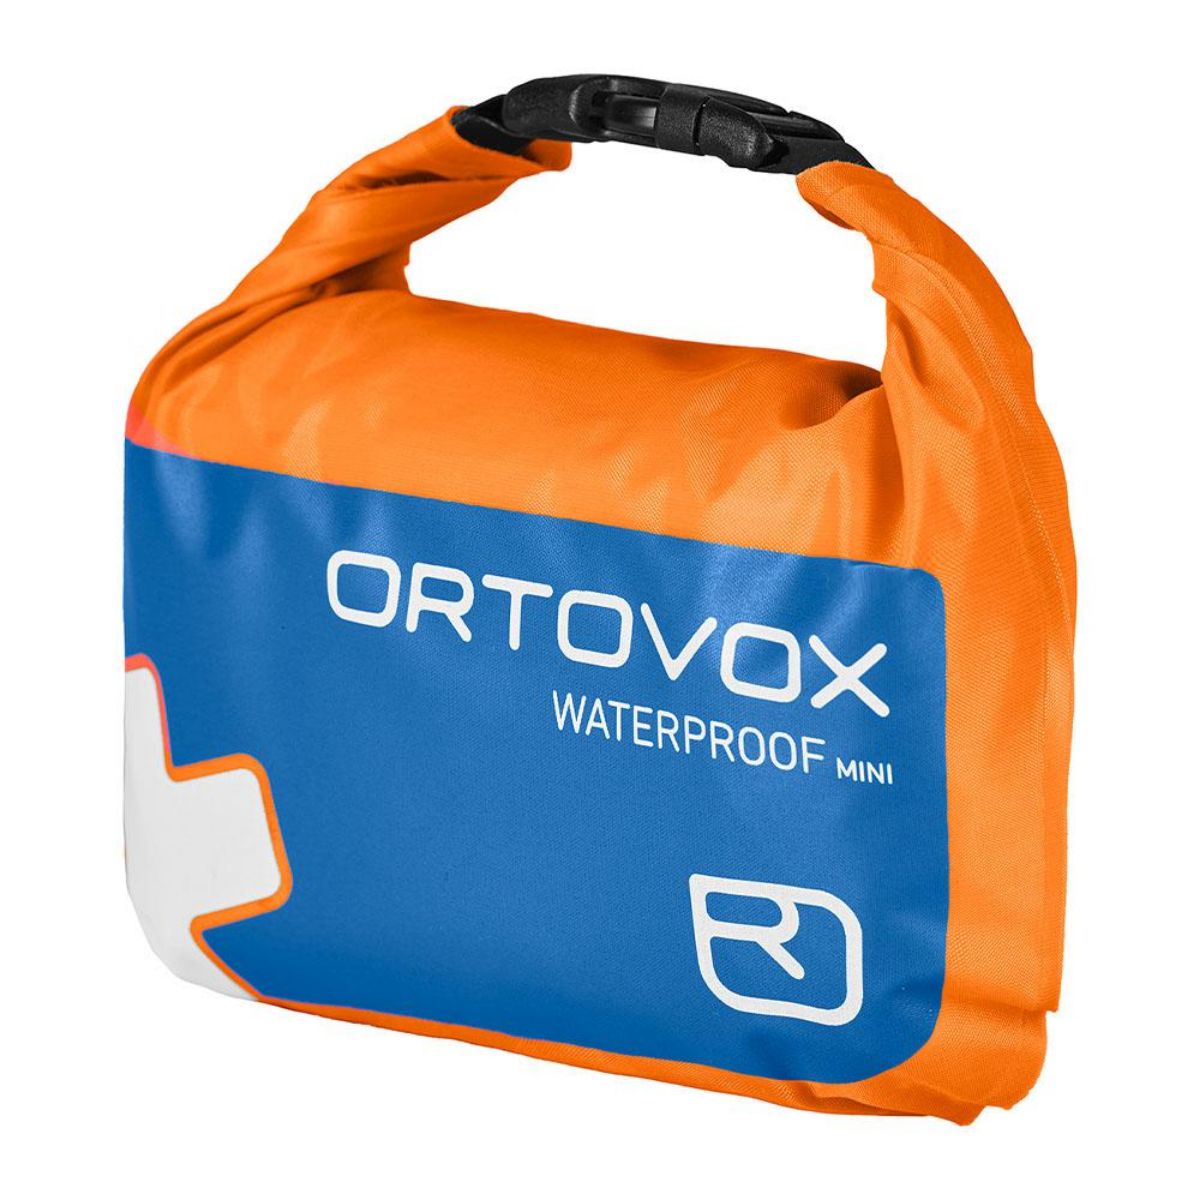 Ortovox first aid waterproof mini kit orange